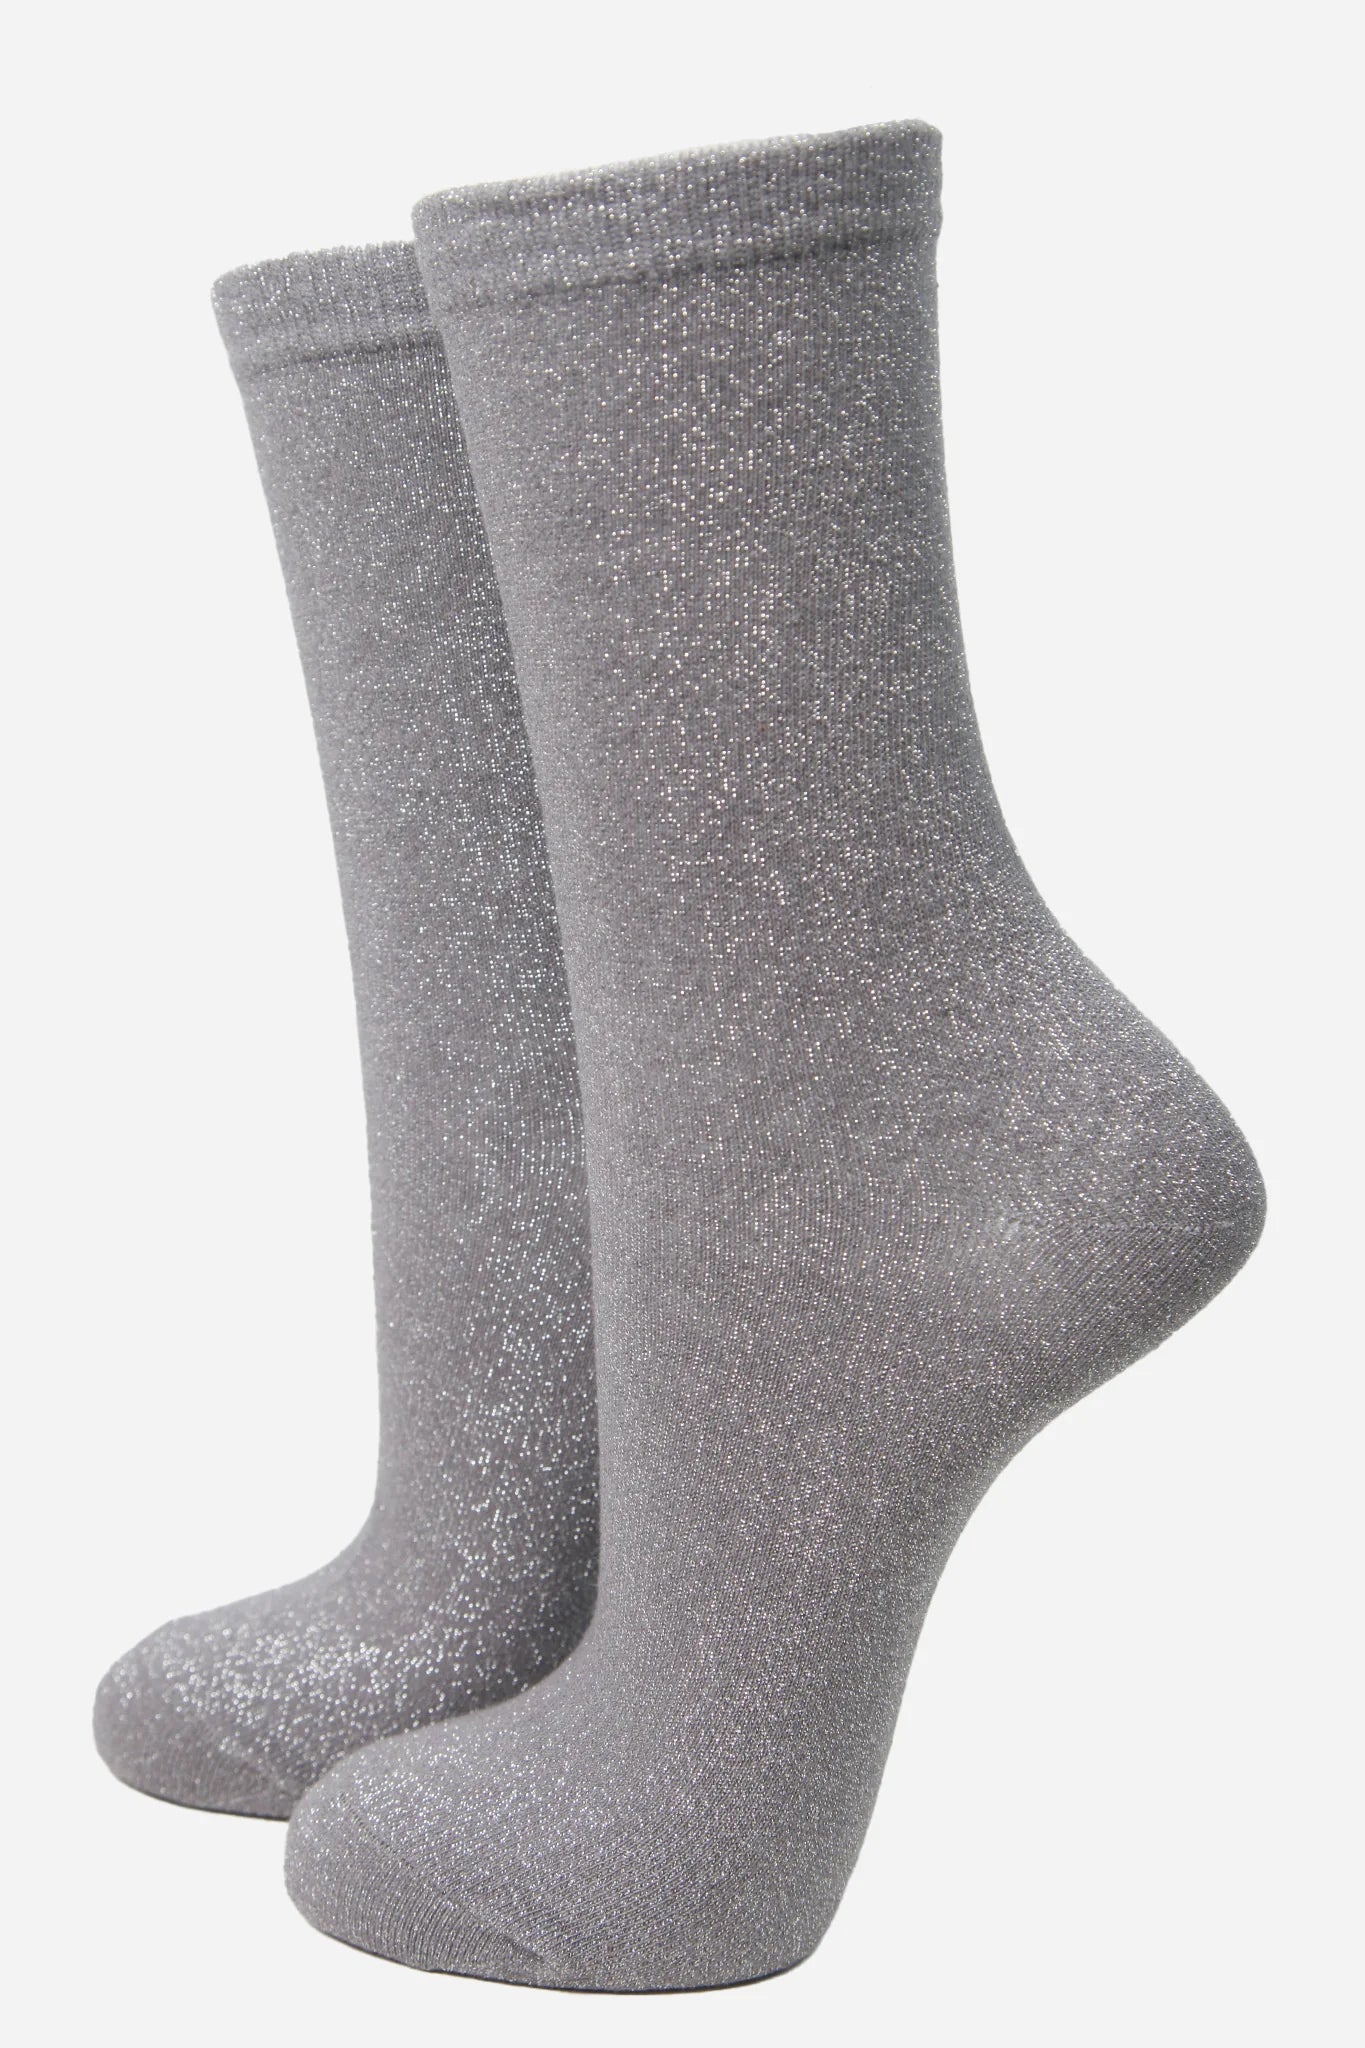 Glitter Cotton Socks in Silver